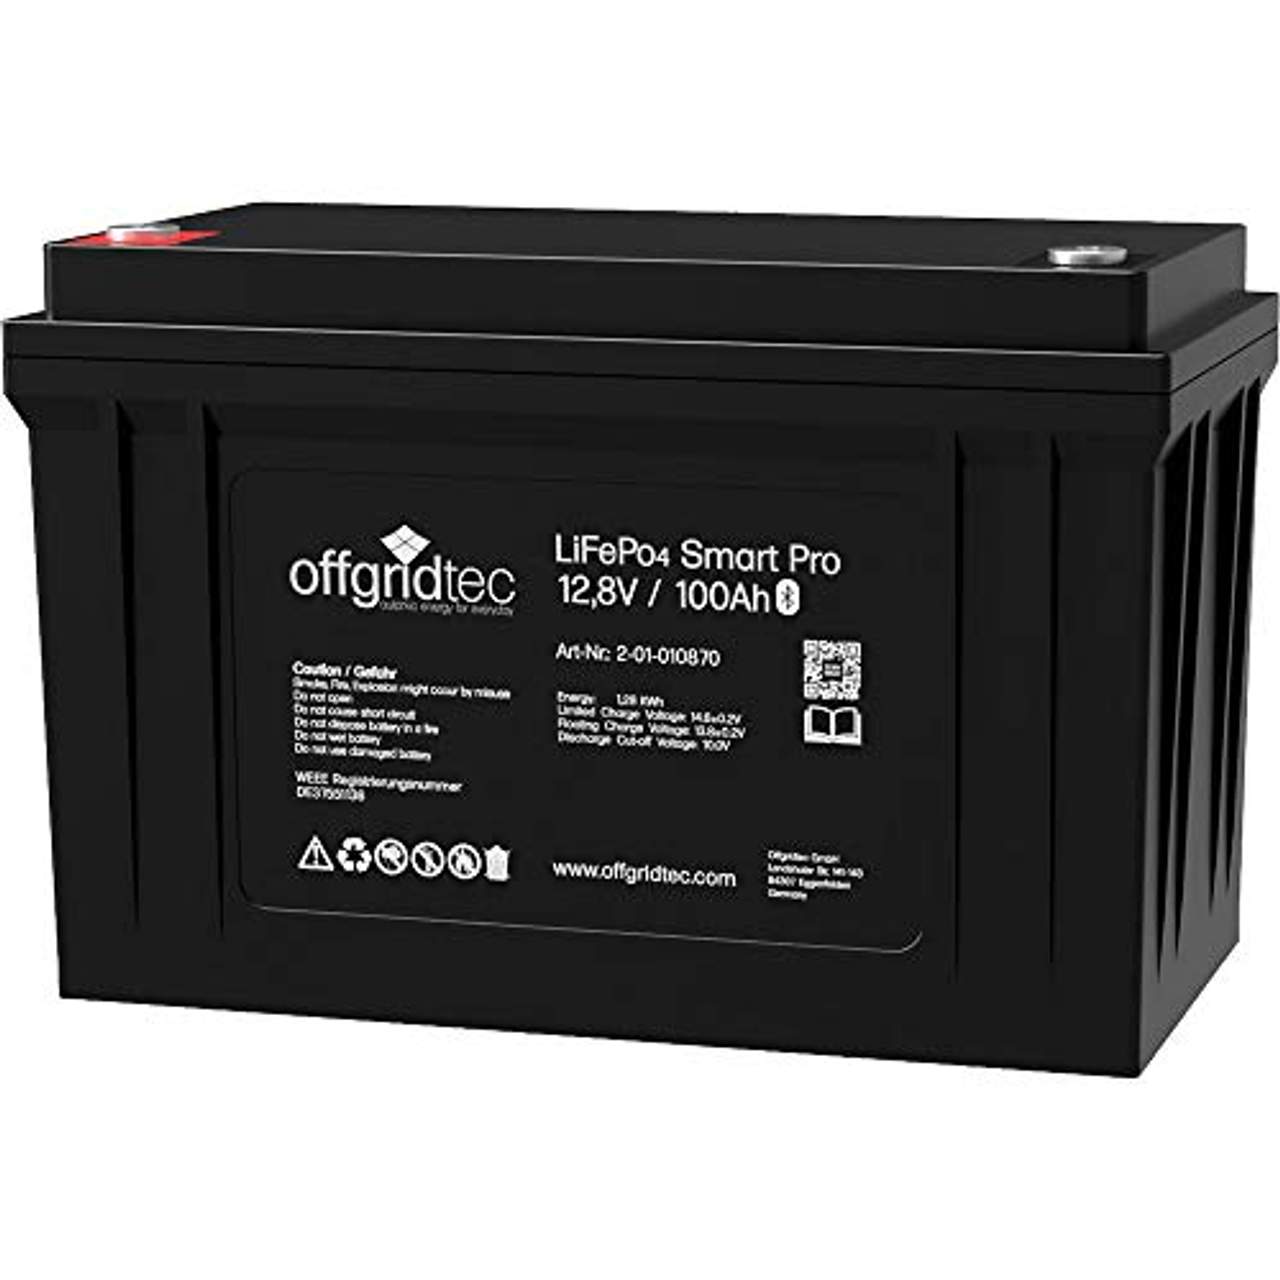 Offgridtec LiFePo4 Batterie 12/100 12,8V 100Ah 1280Wh BMS integriert